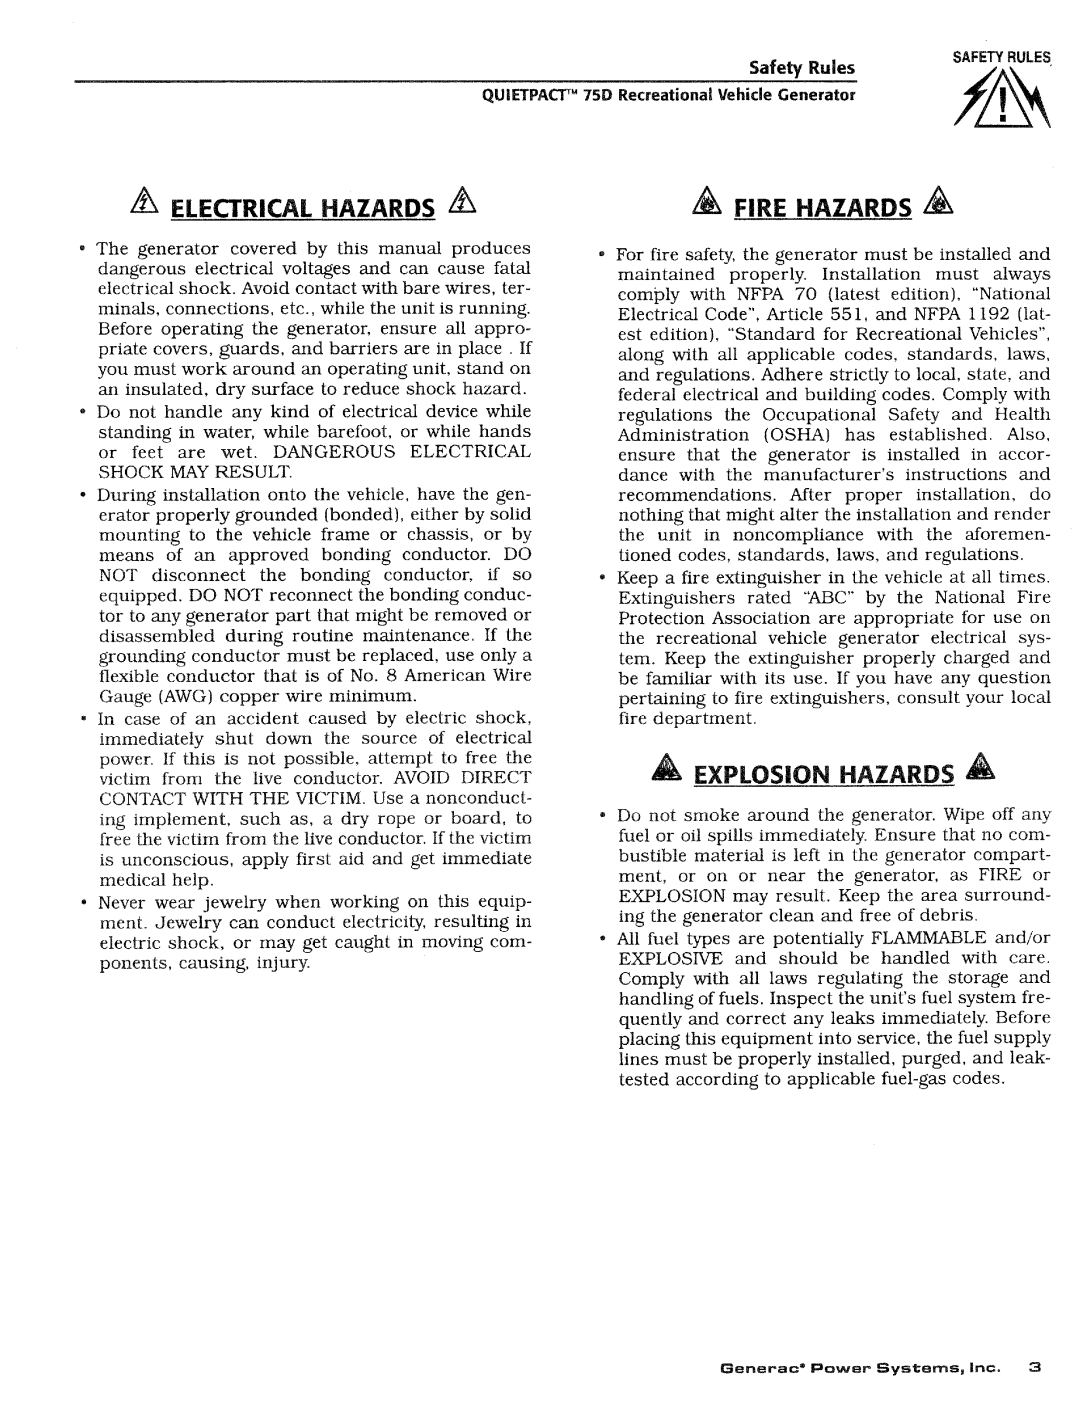 Generac Power Systems 004270-1 manual 